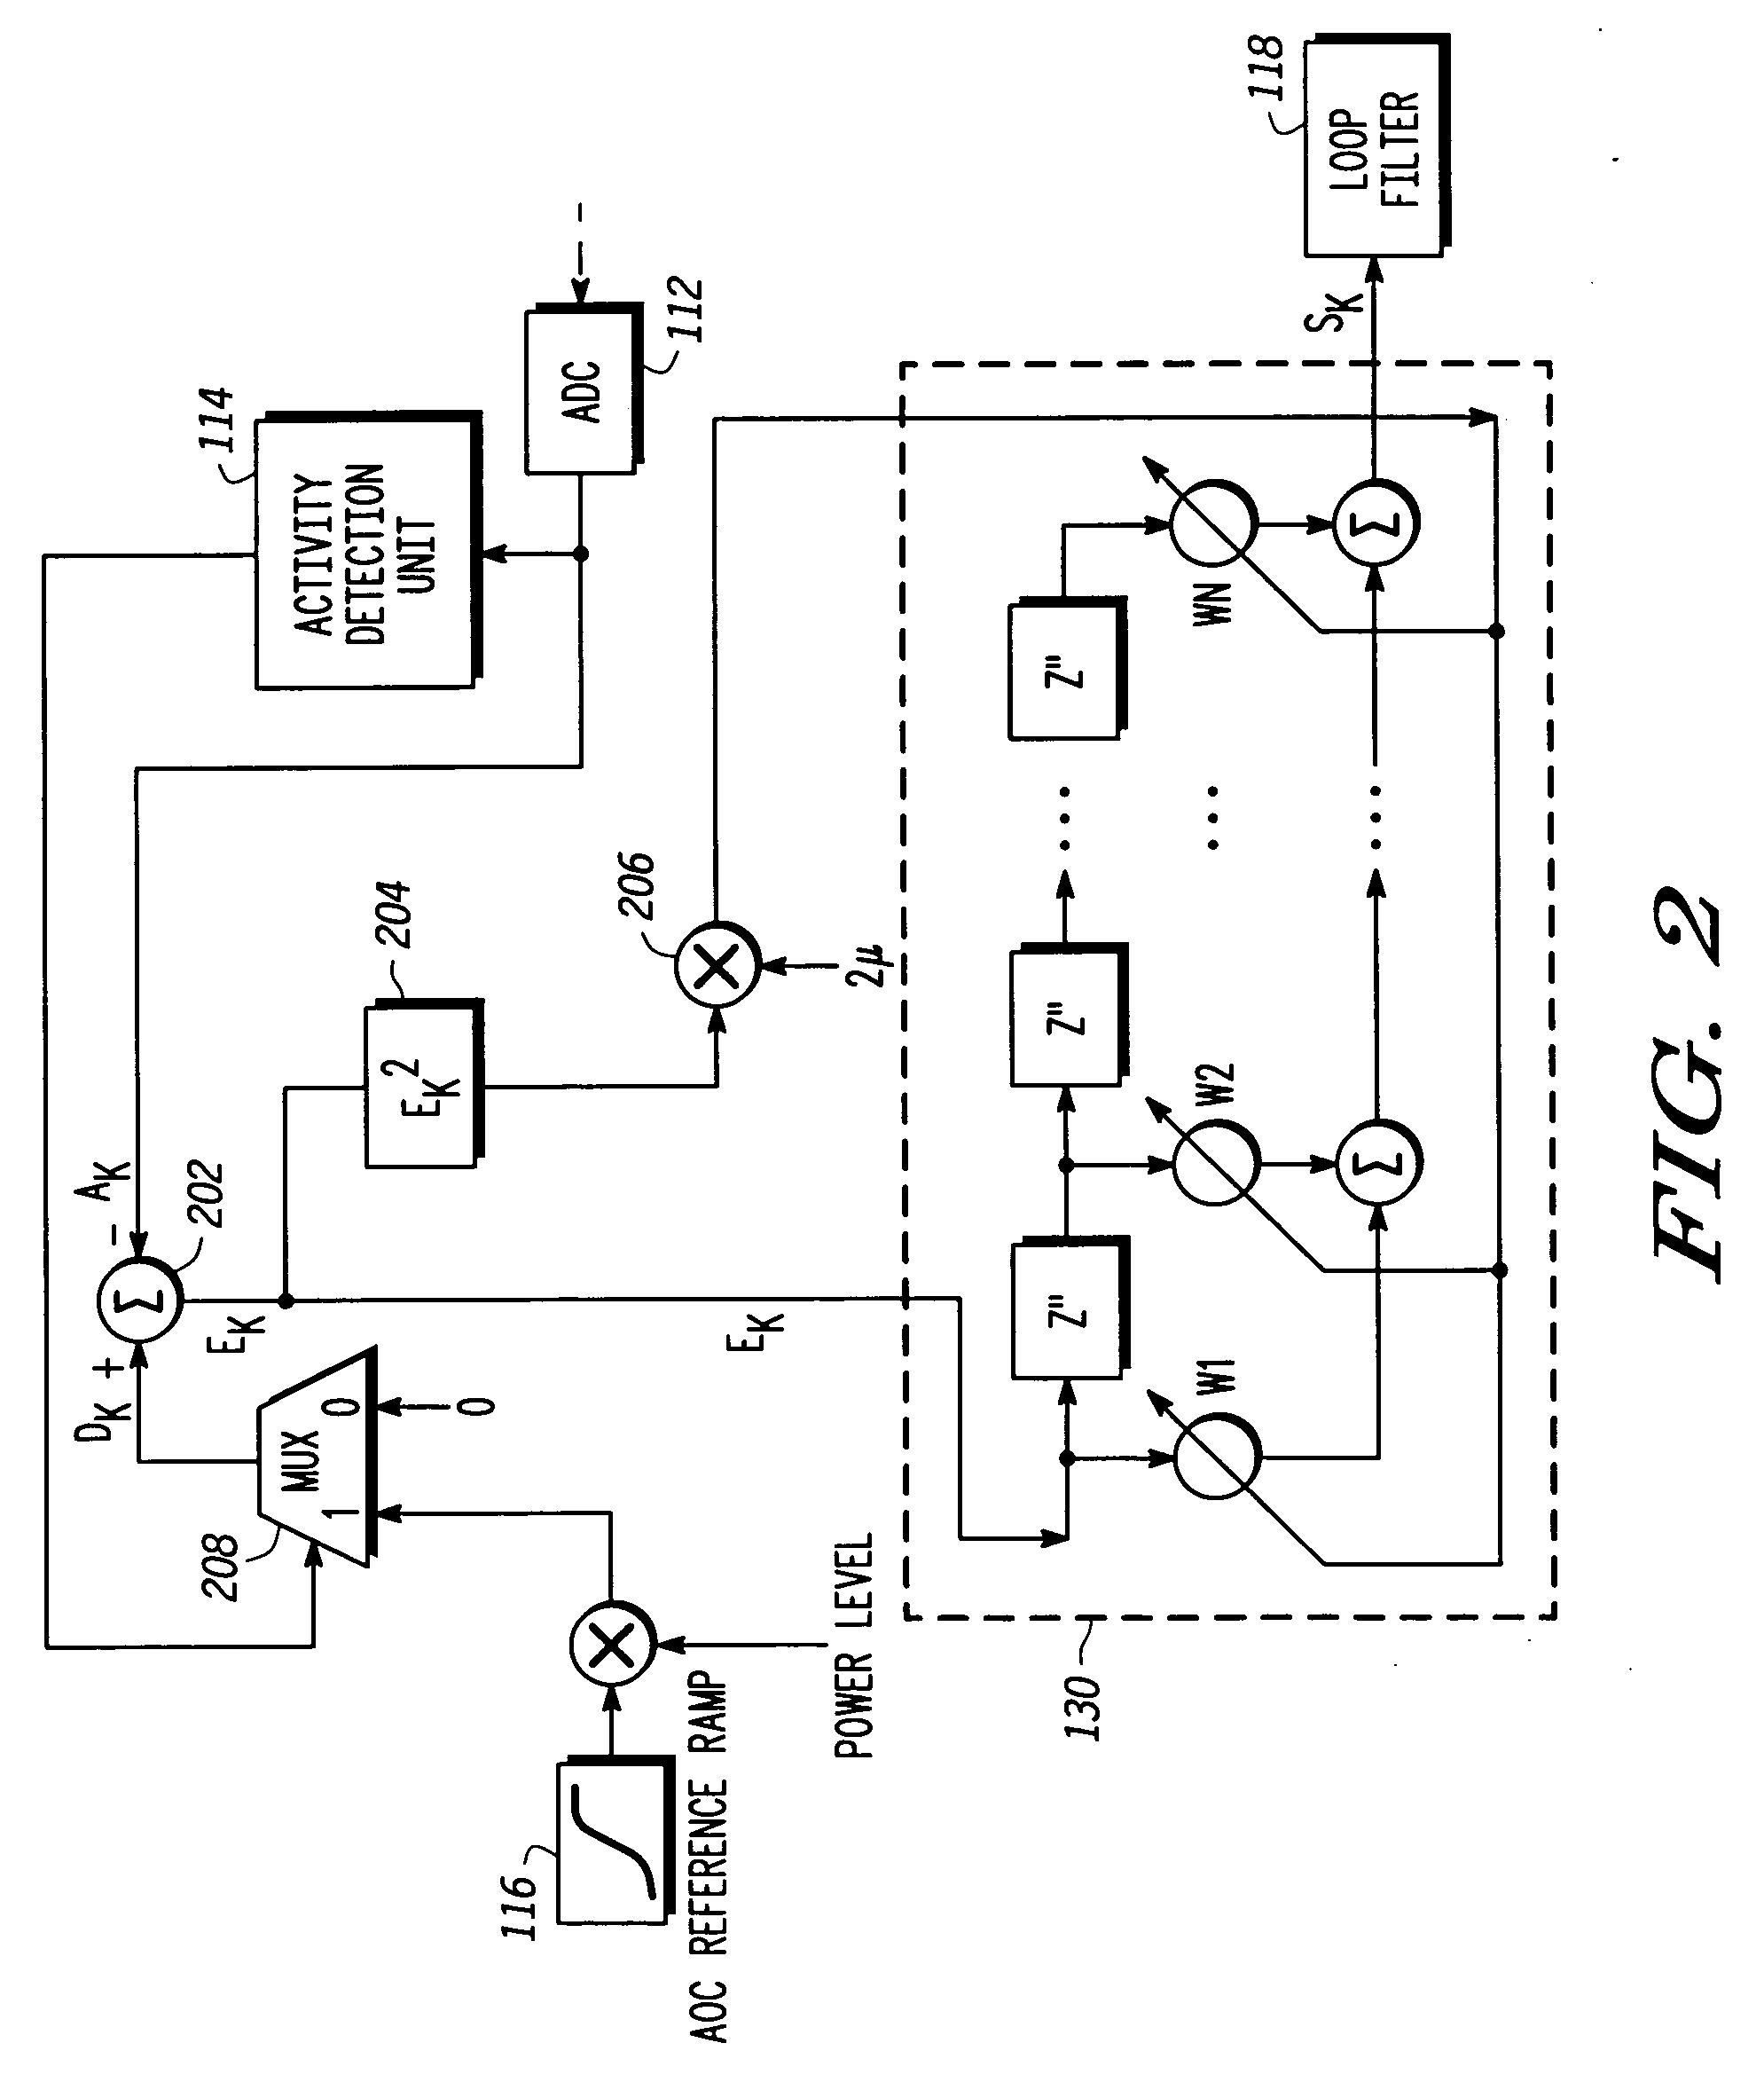 Adaptive transmit power control system